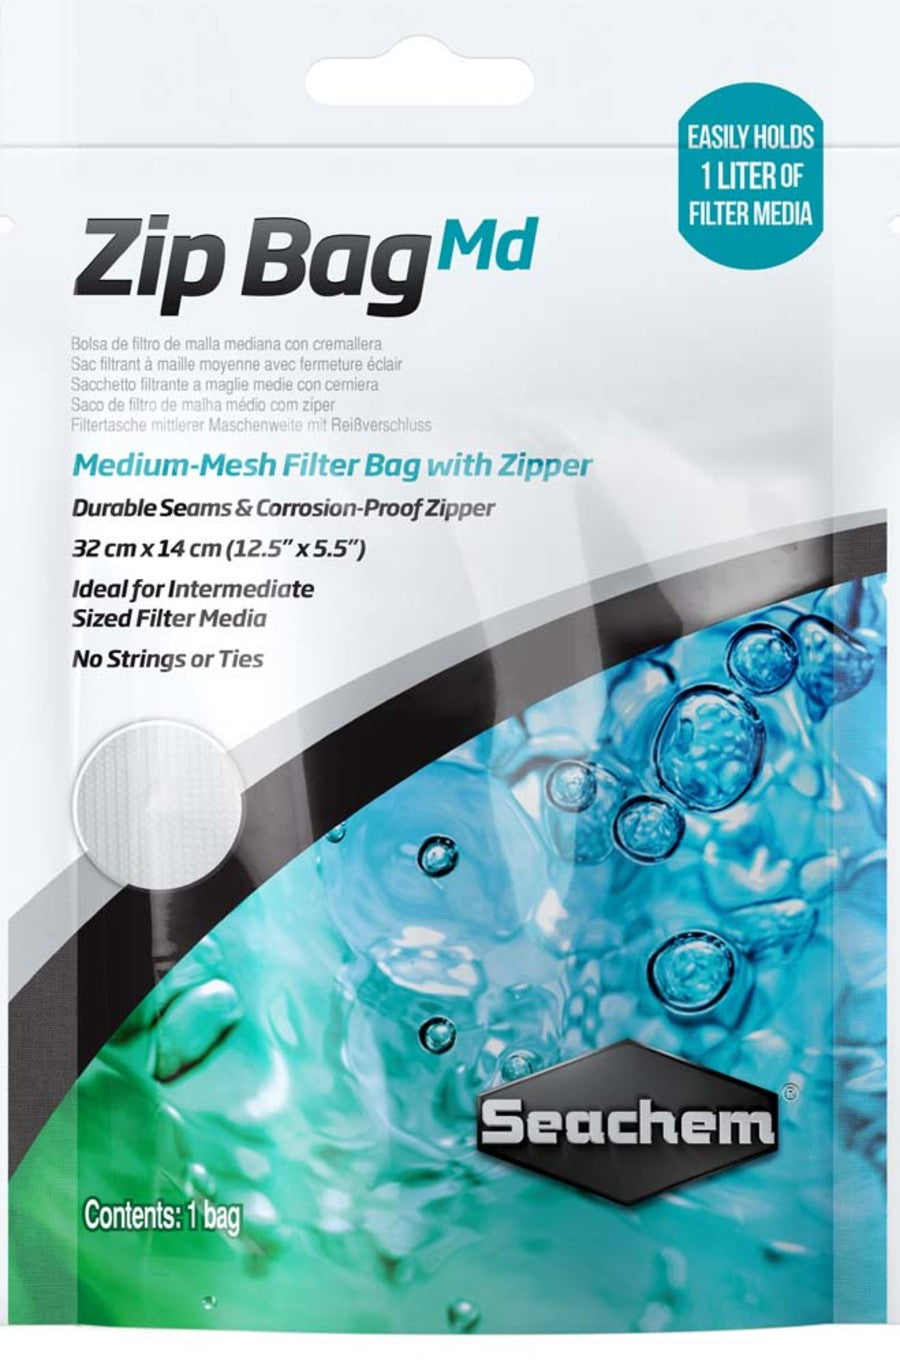 Seachem Laboratories Mesh Filter Bag with Zipper